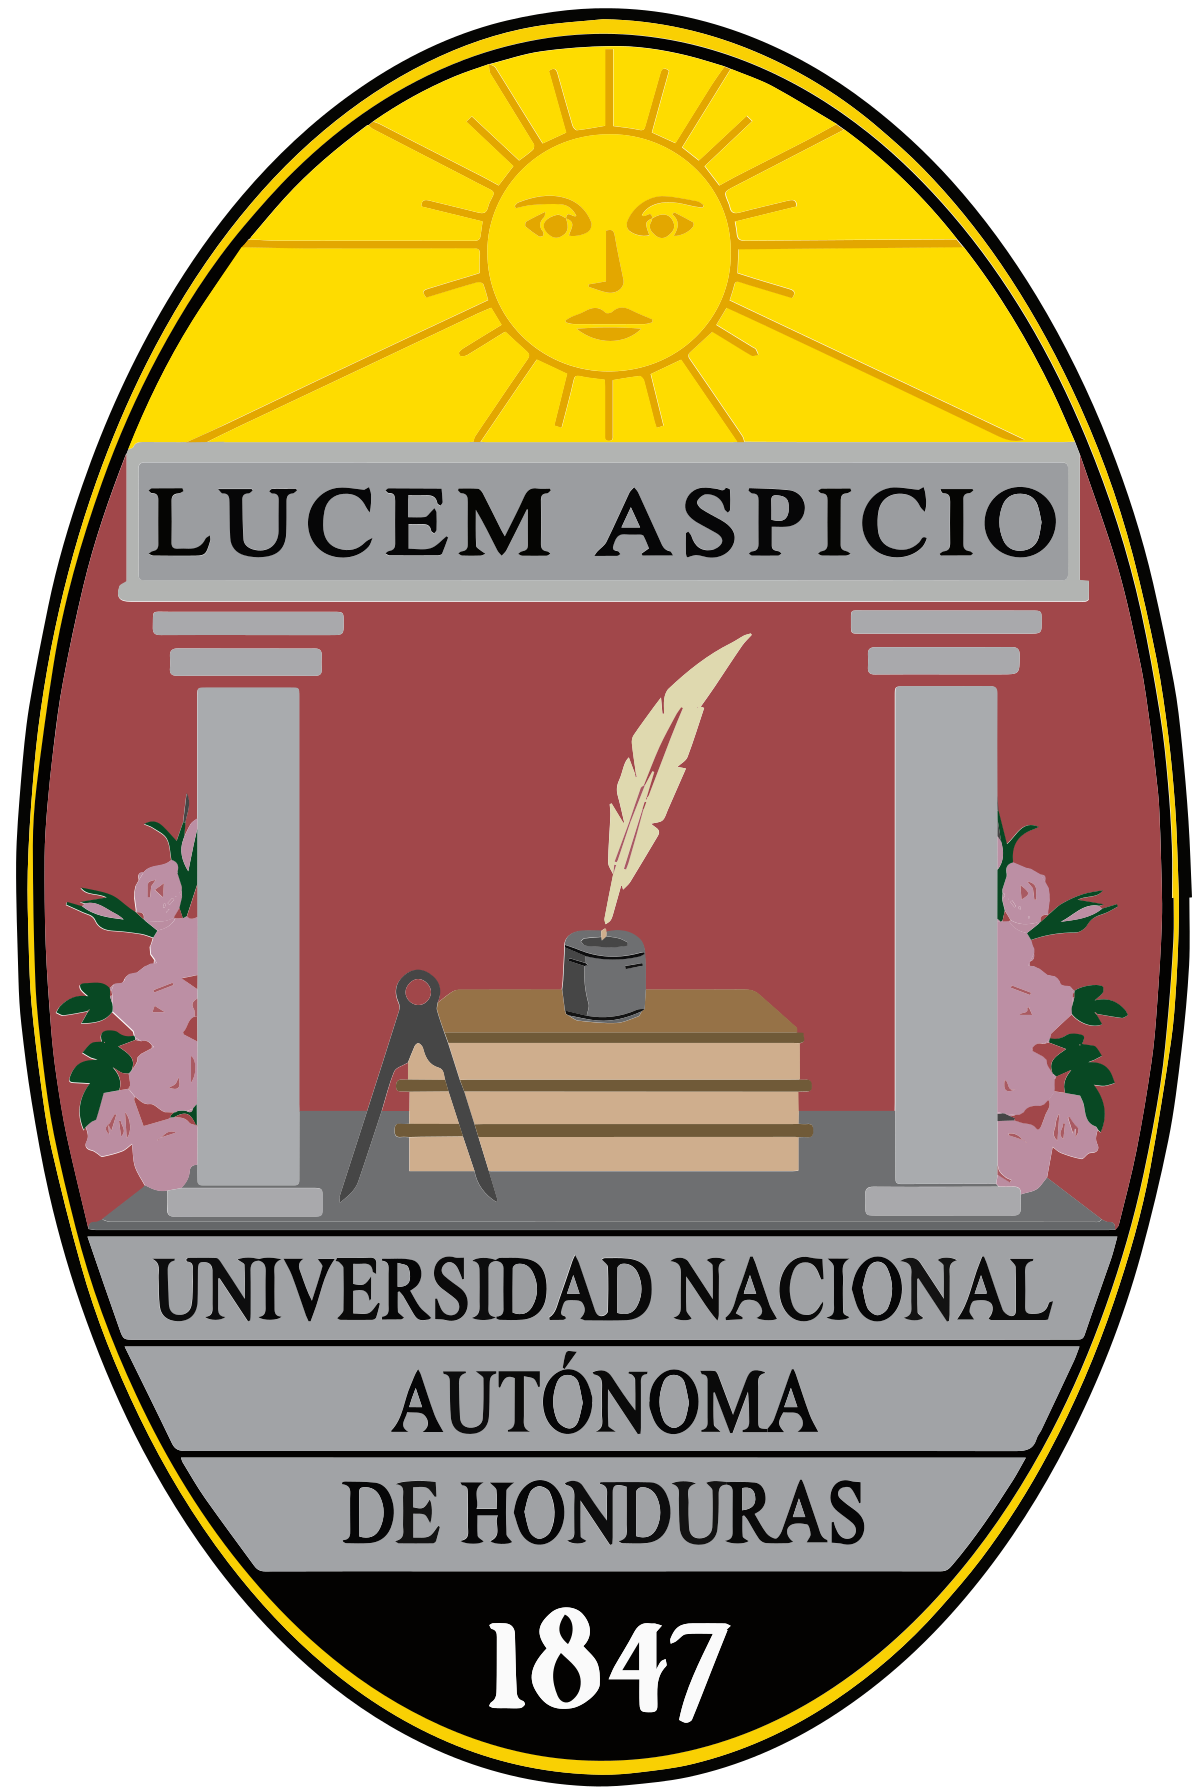 National Autonomous University of Honduras logo